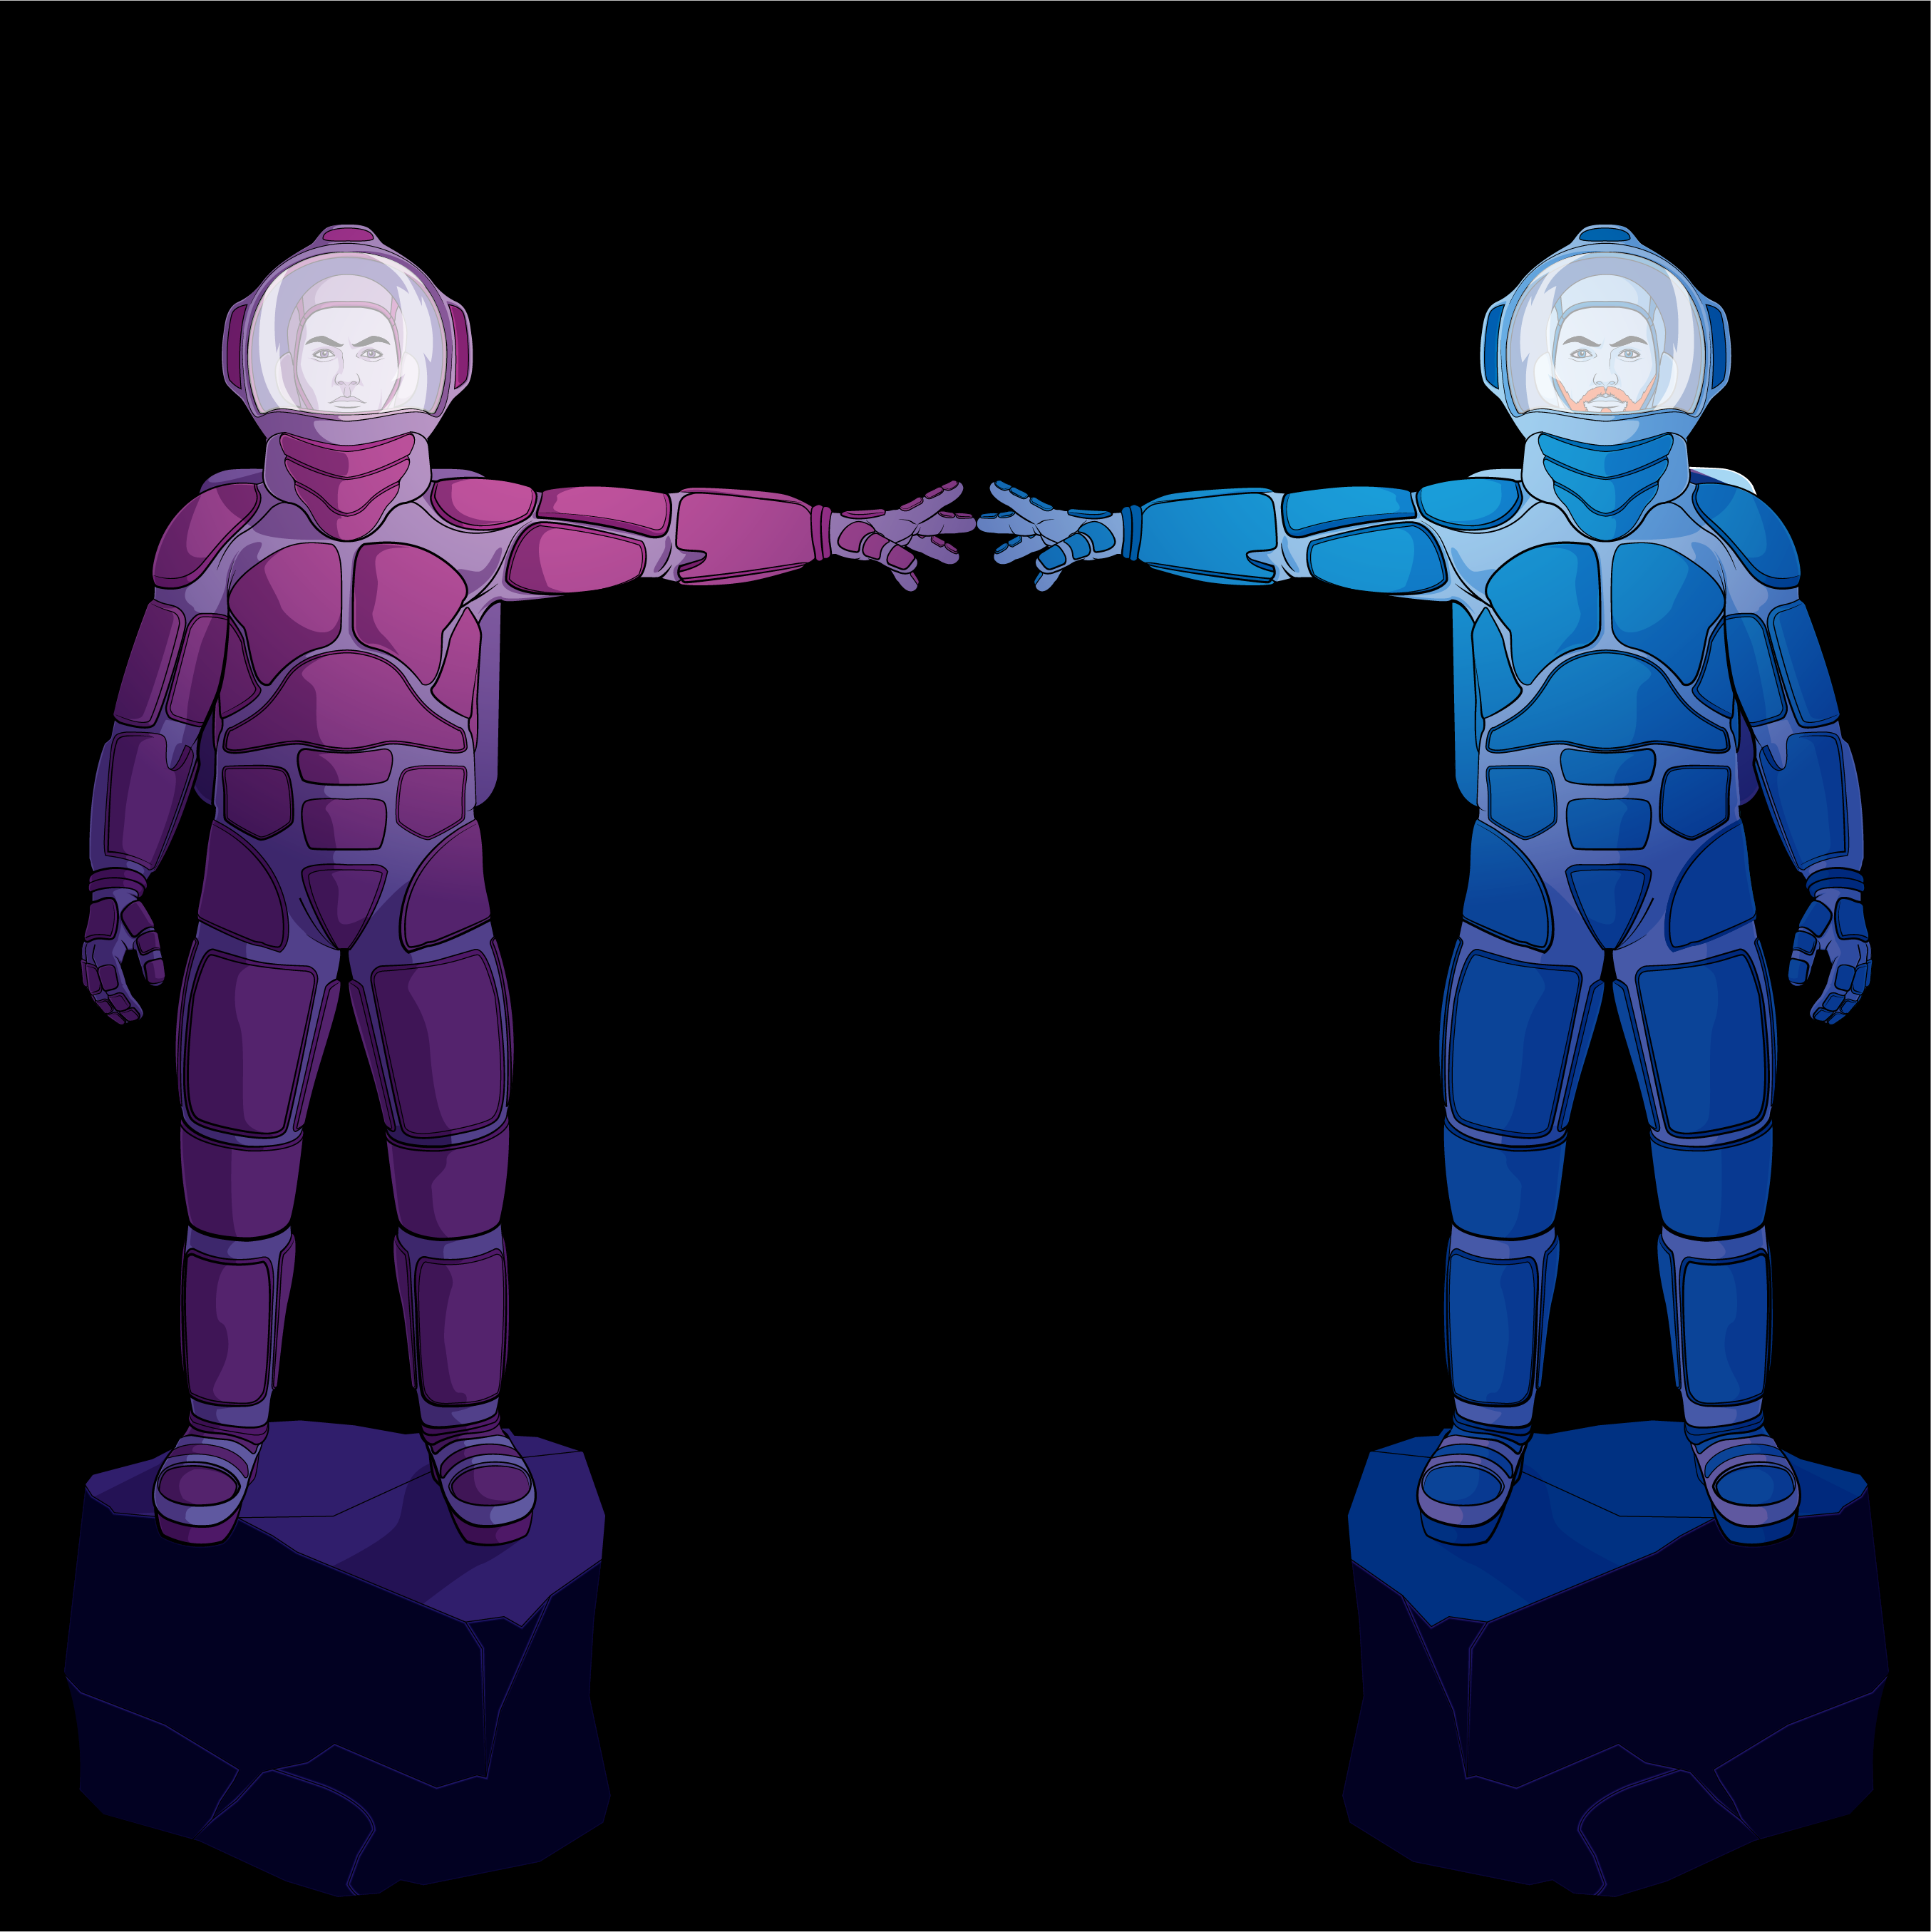 two astronauts grabbing hands